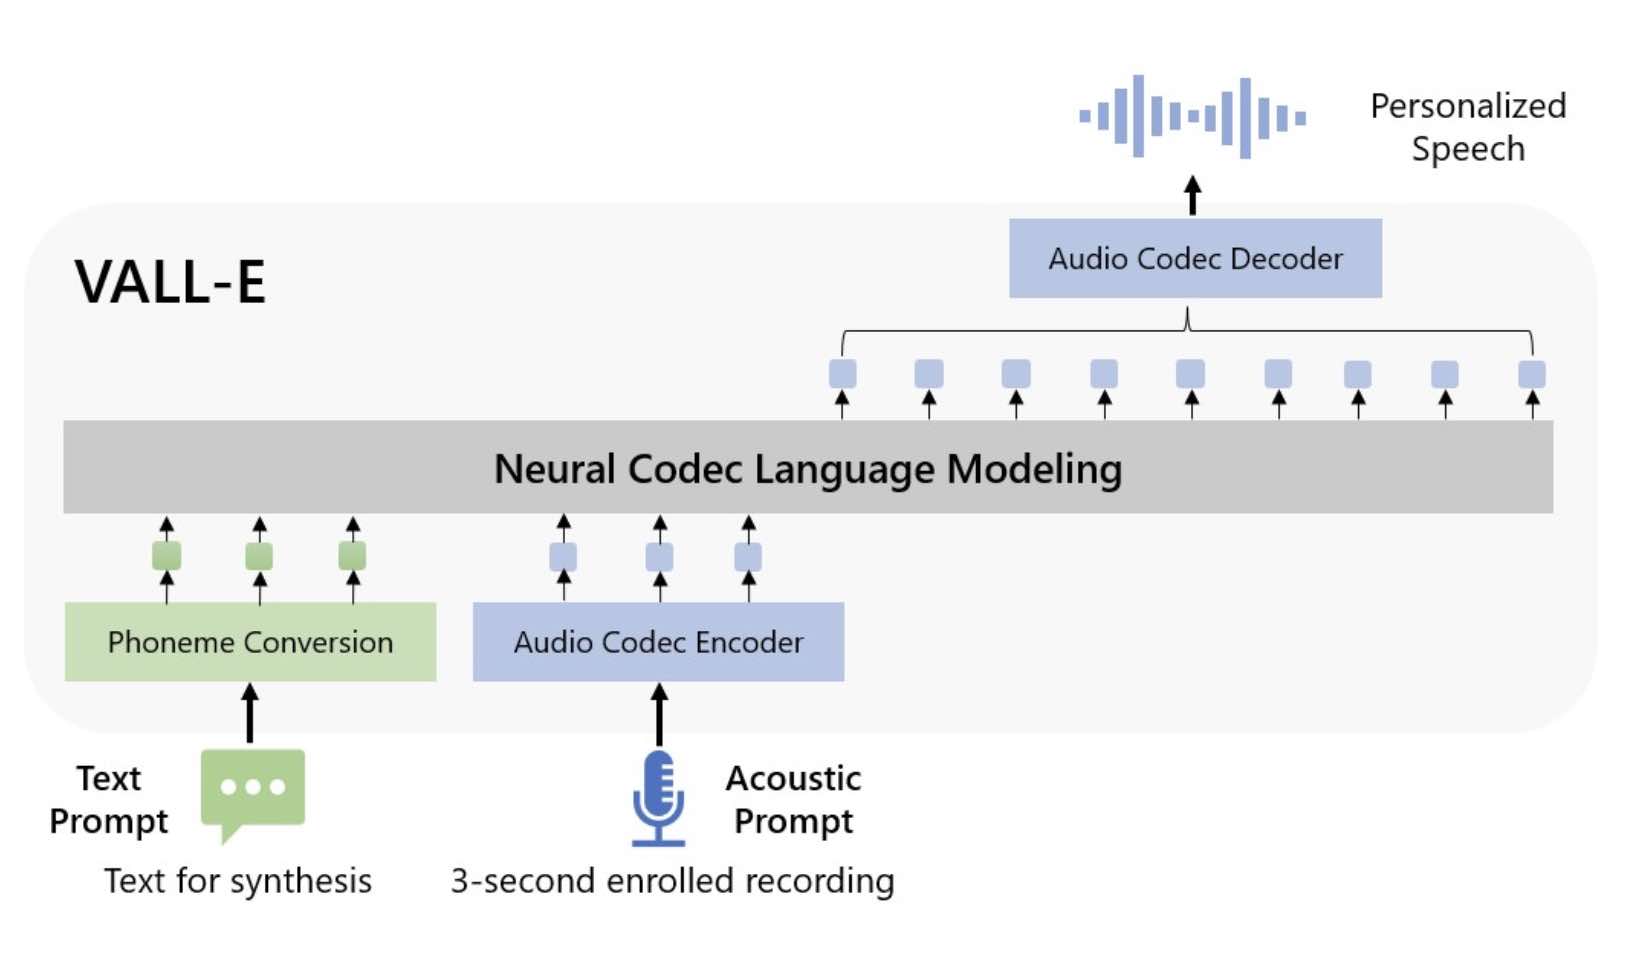 Nova inteligência artificial leva 3 segundos para imitar voz humana